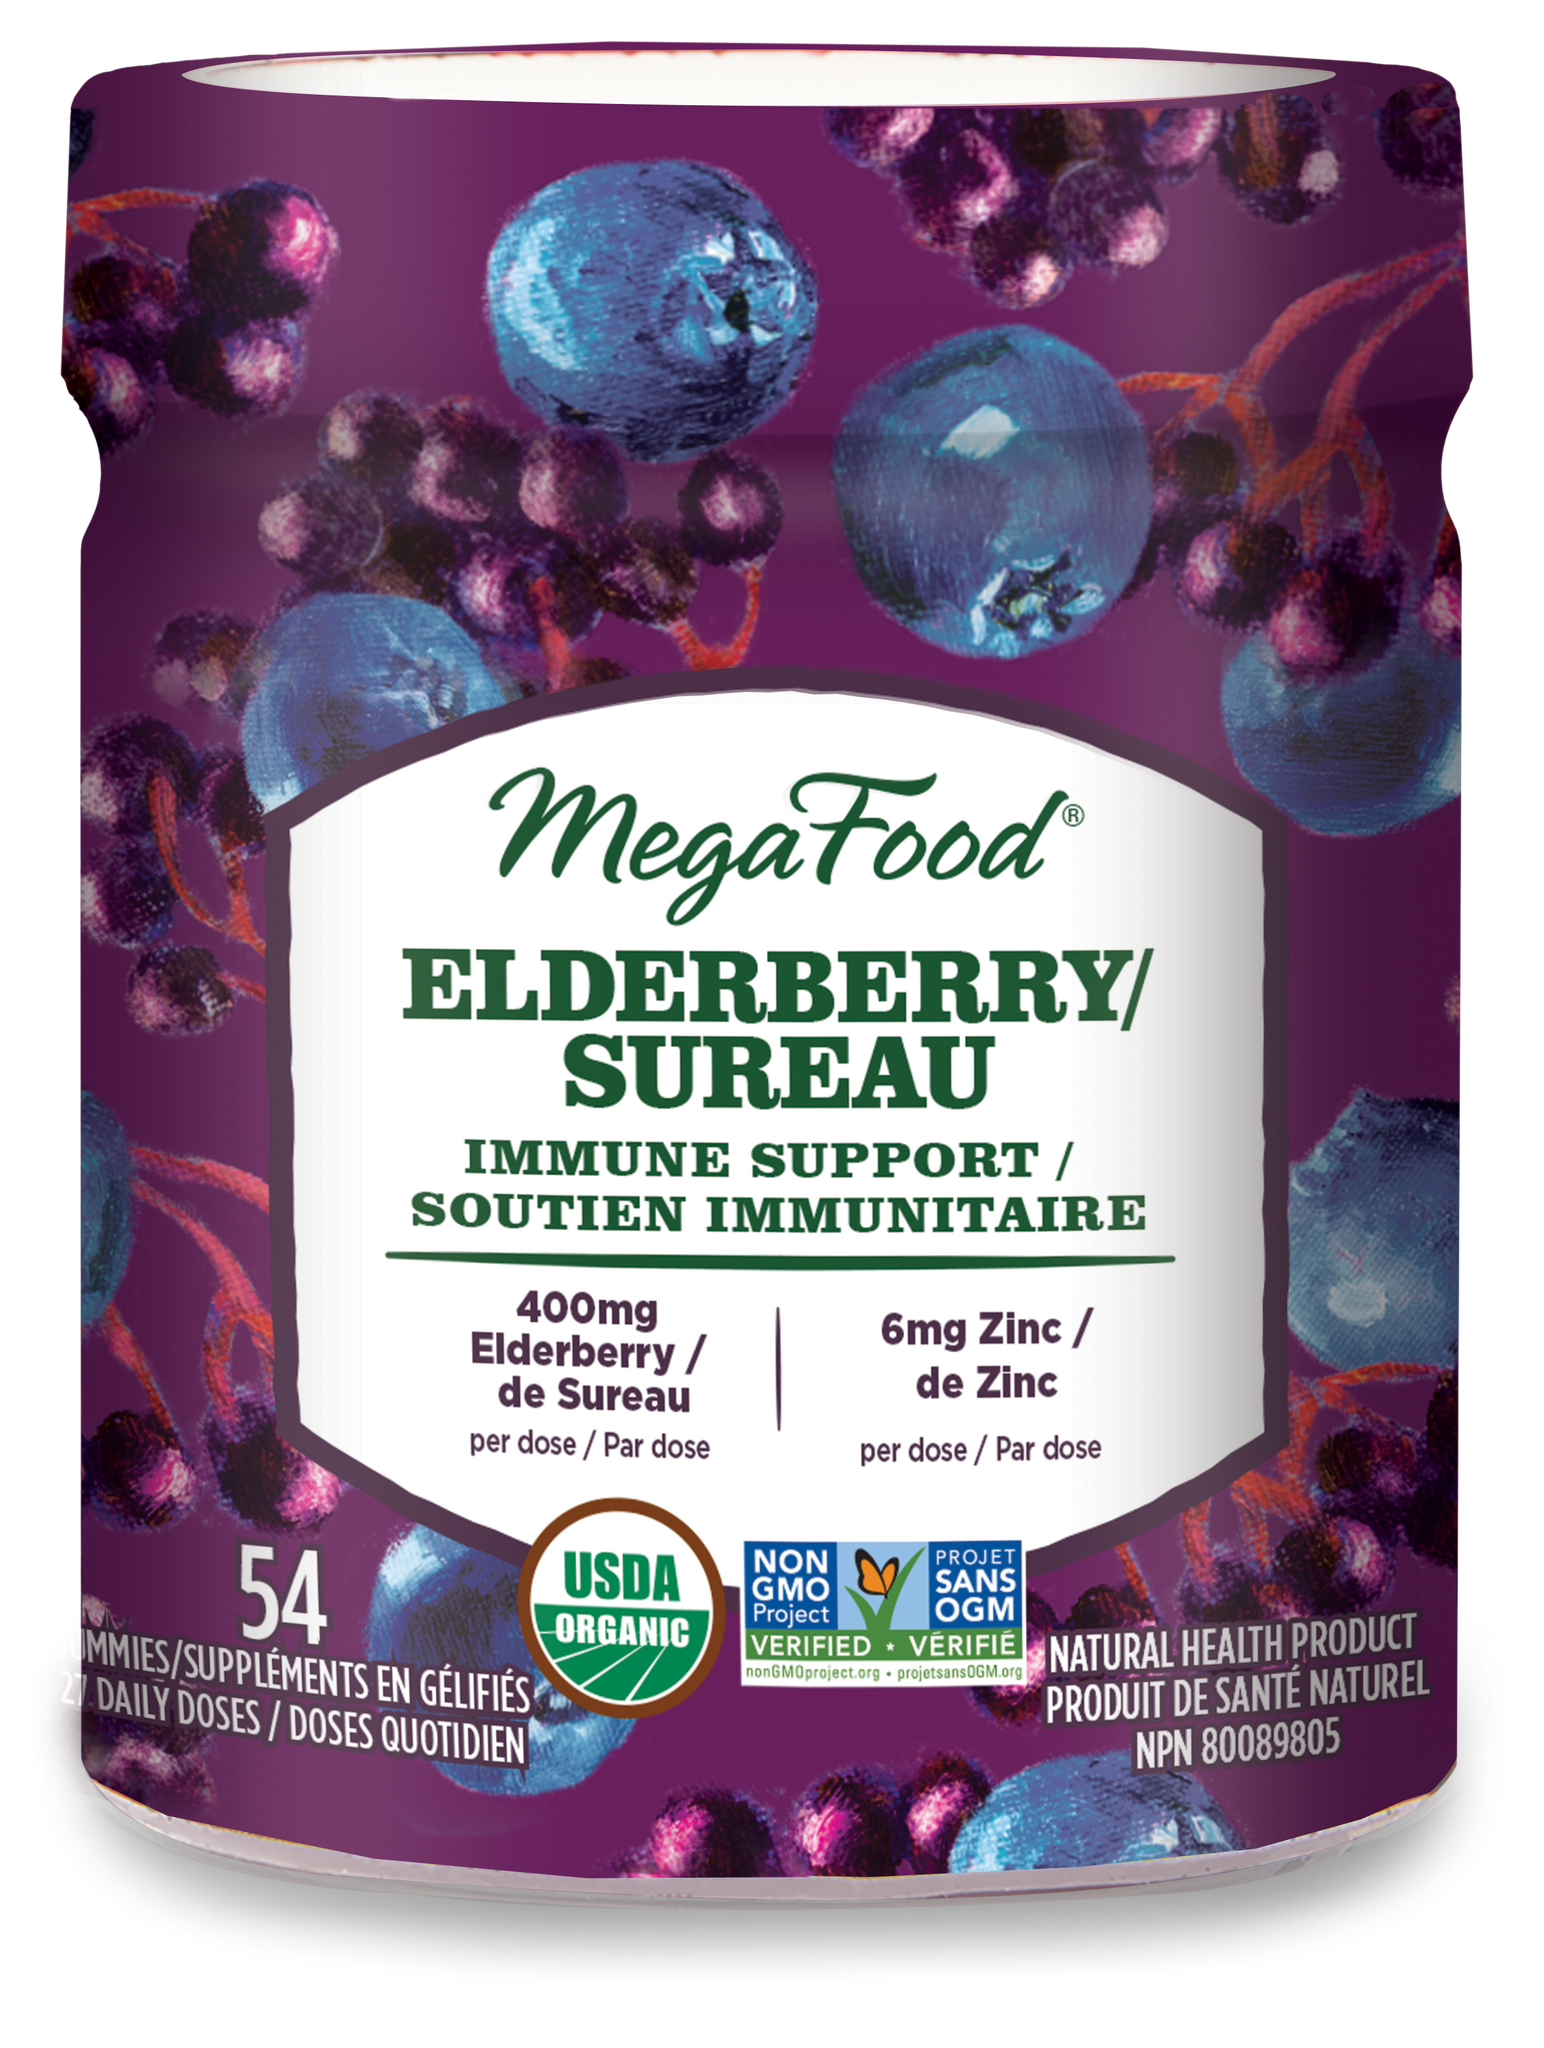 MegaFood Elderberry Immune Support